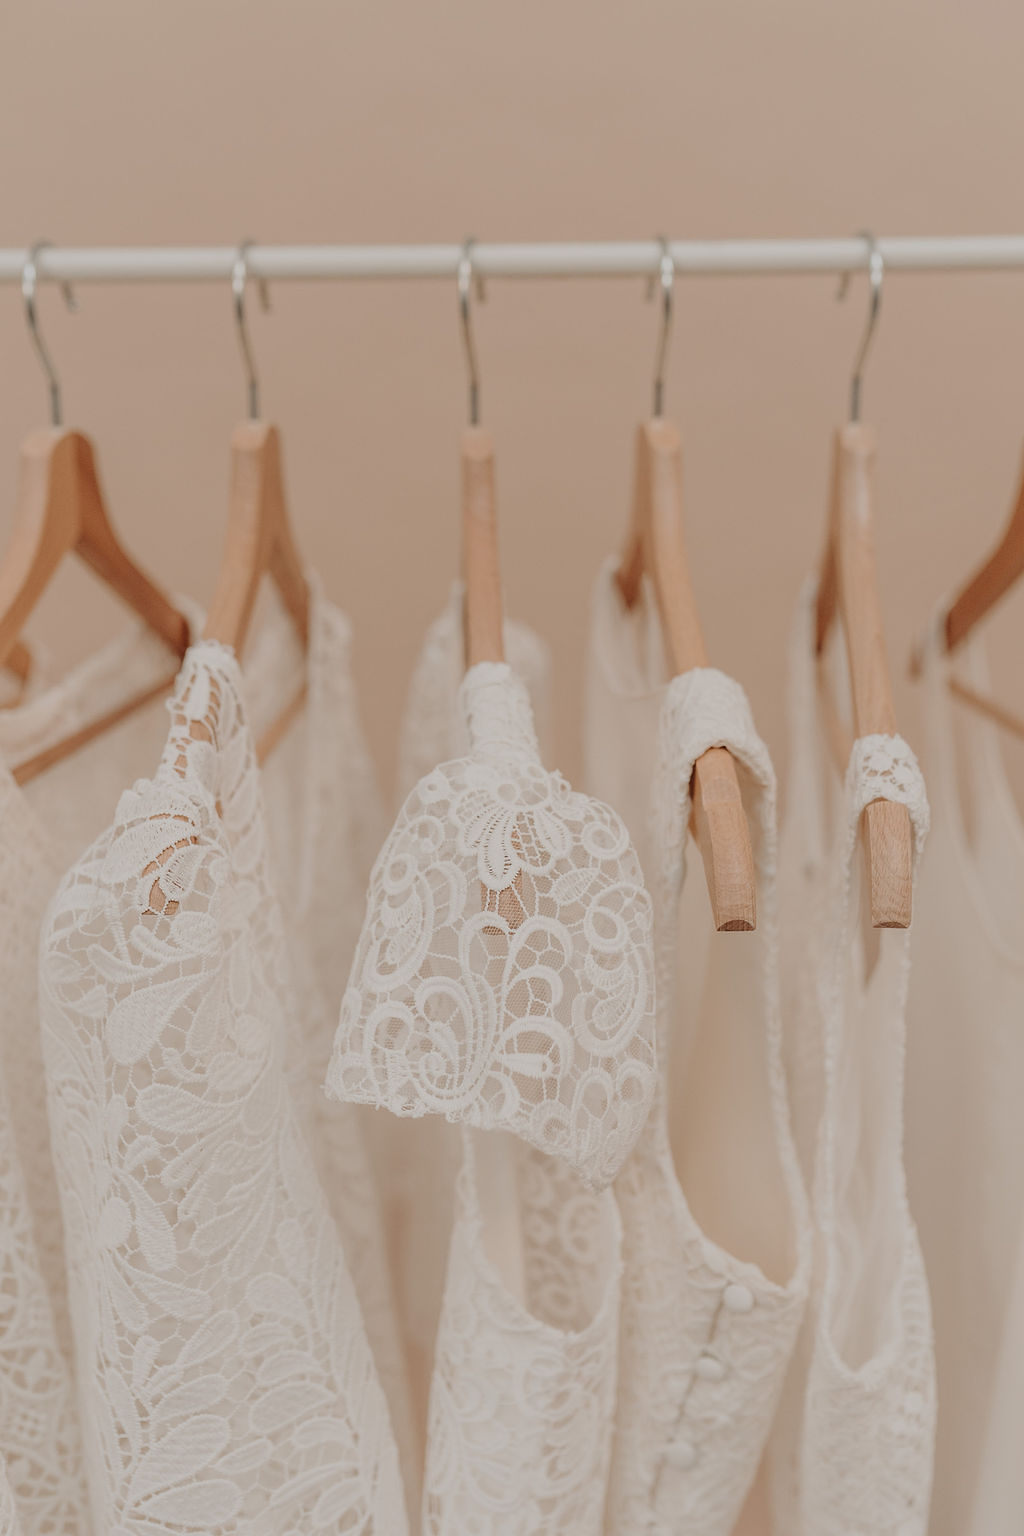 Caroline Quesnel Collection 2020 - Robes de mariée - Blog Mariage Madame C